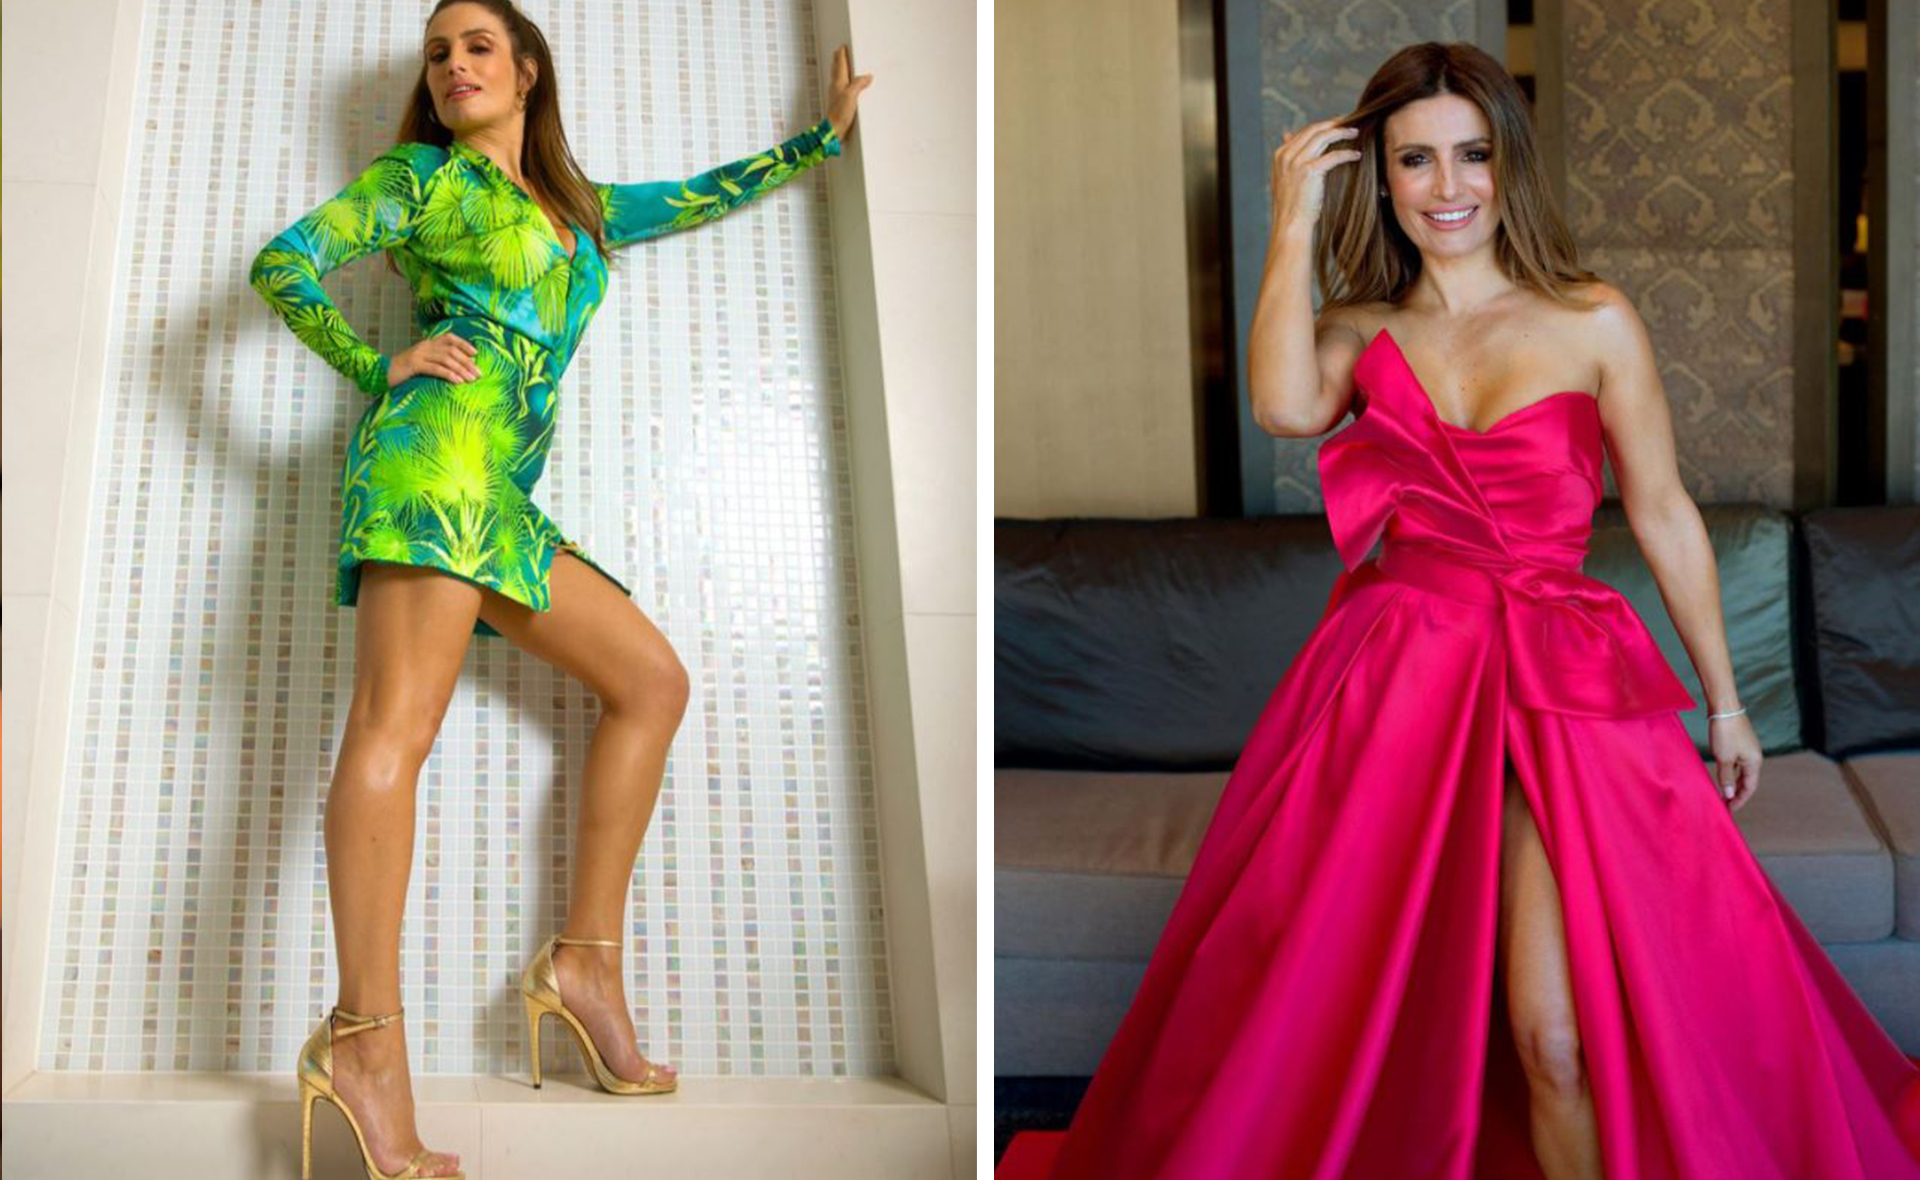 Bespoke & glamorous: Inside Ada Nicodemou’s wardrobe of dresses, and where to shop them